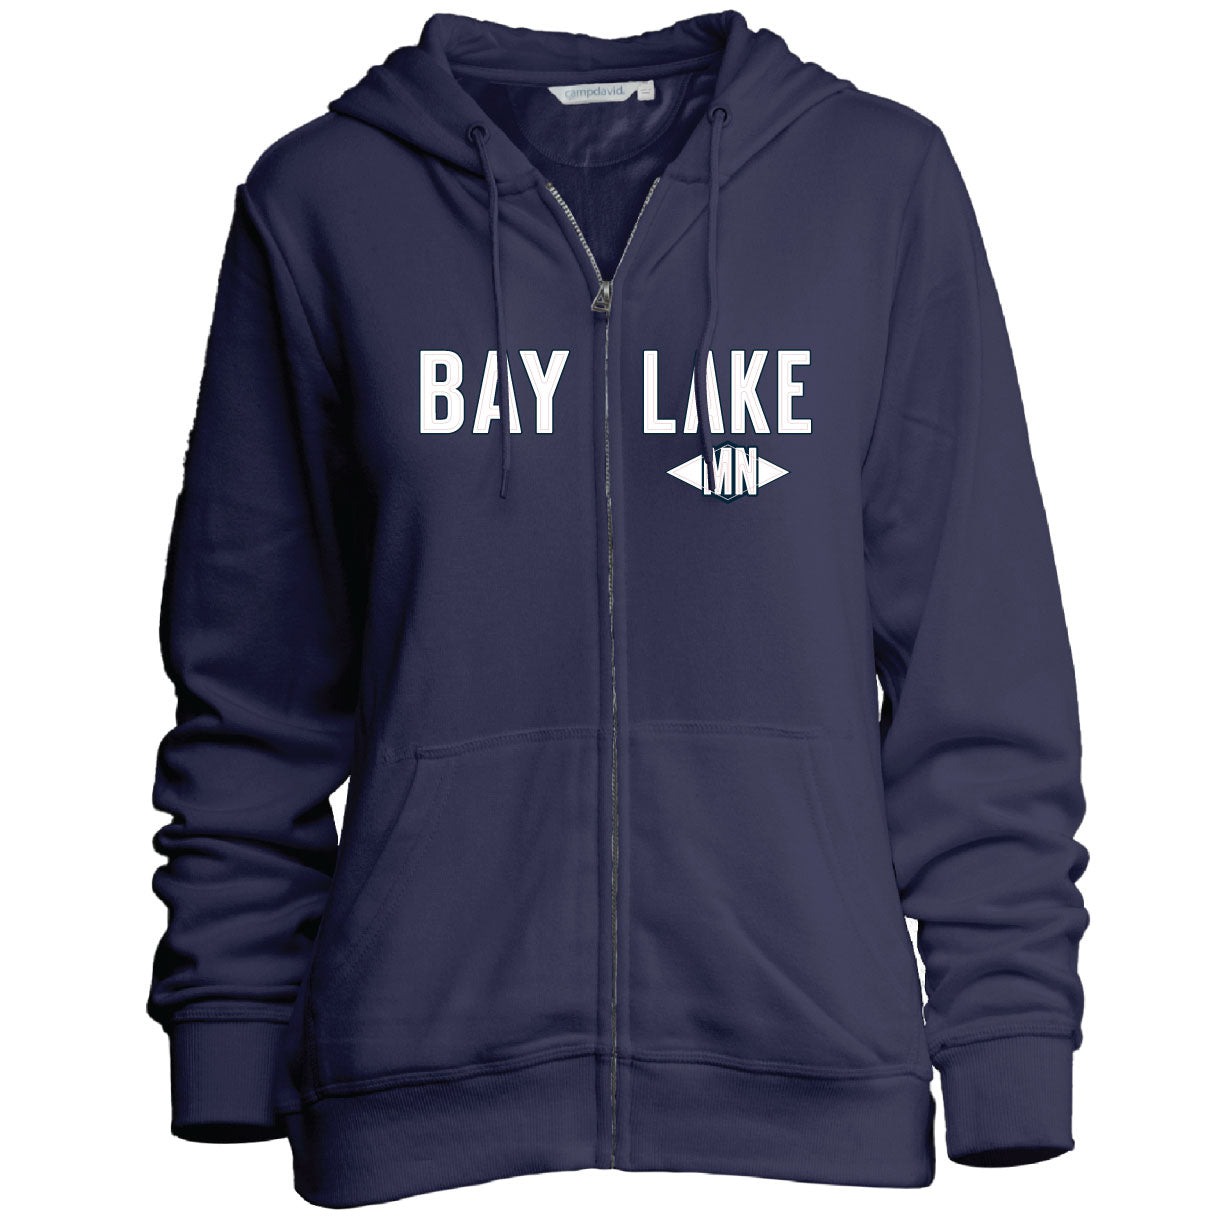 Bay Lake Comfy Full Zip - Navy